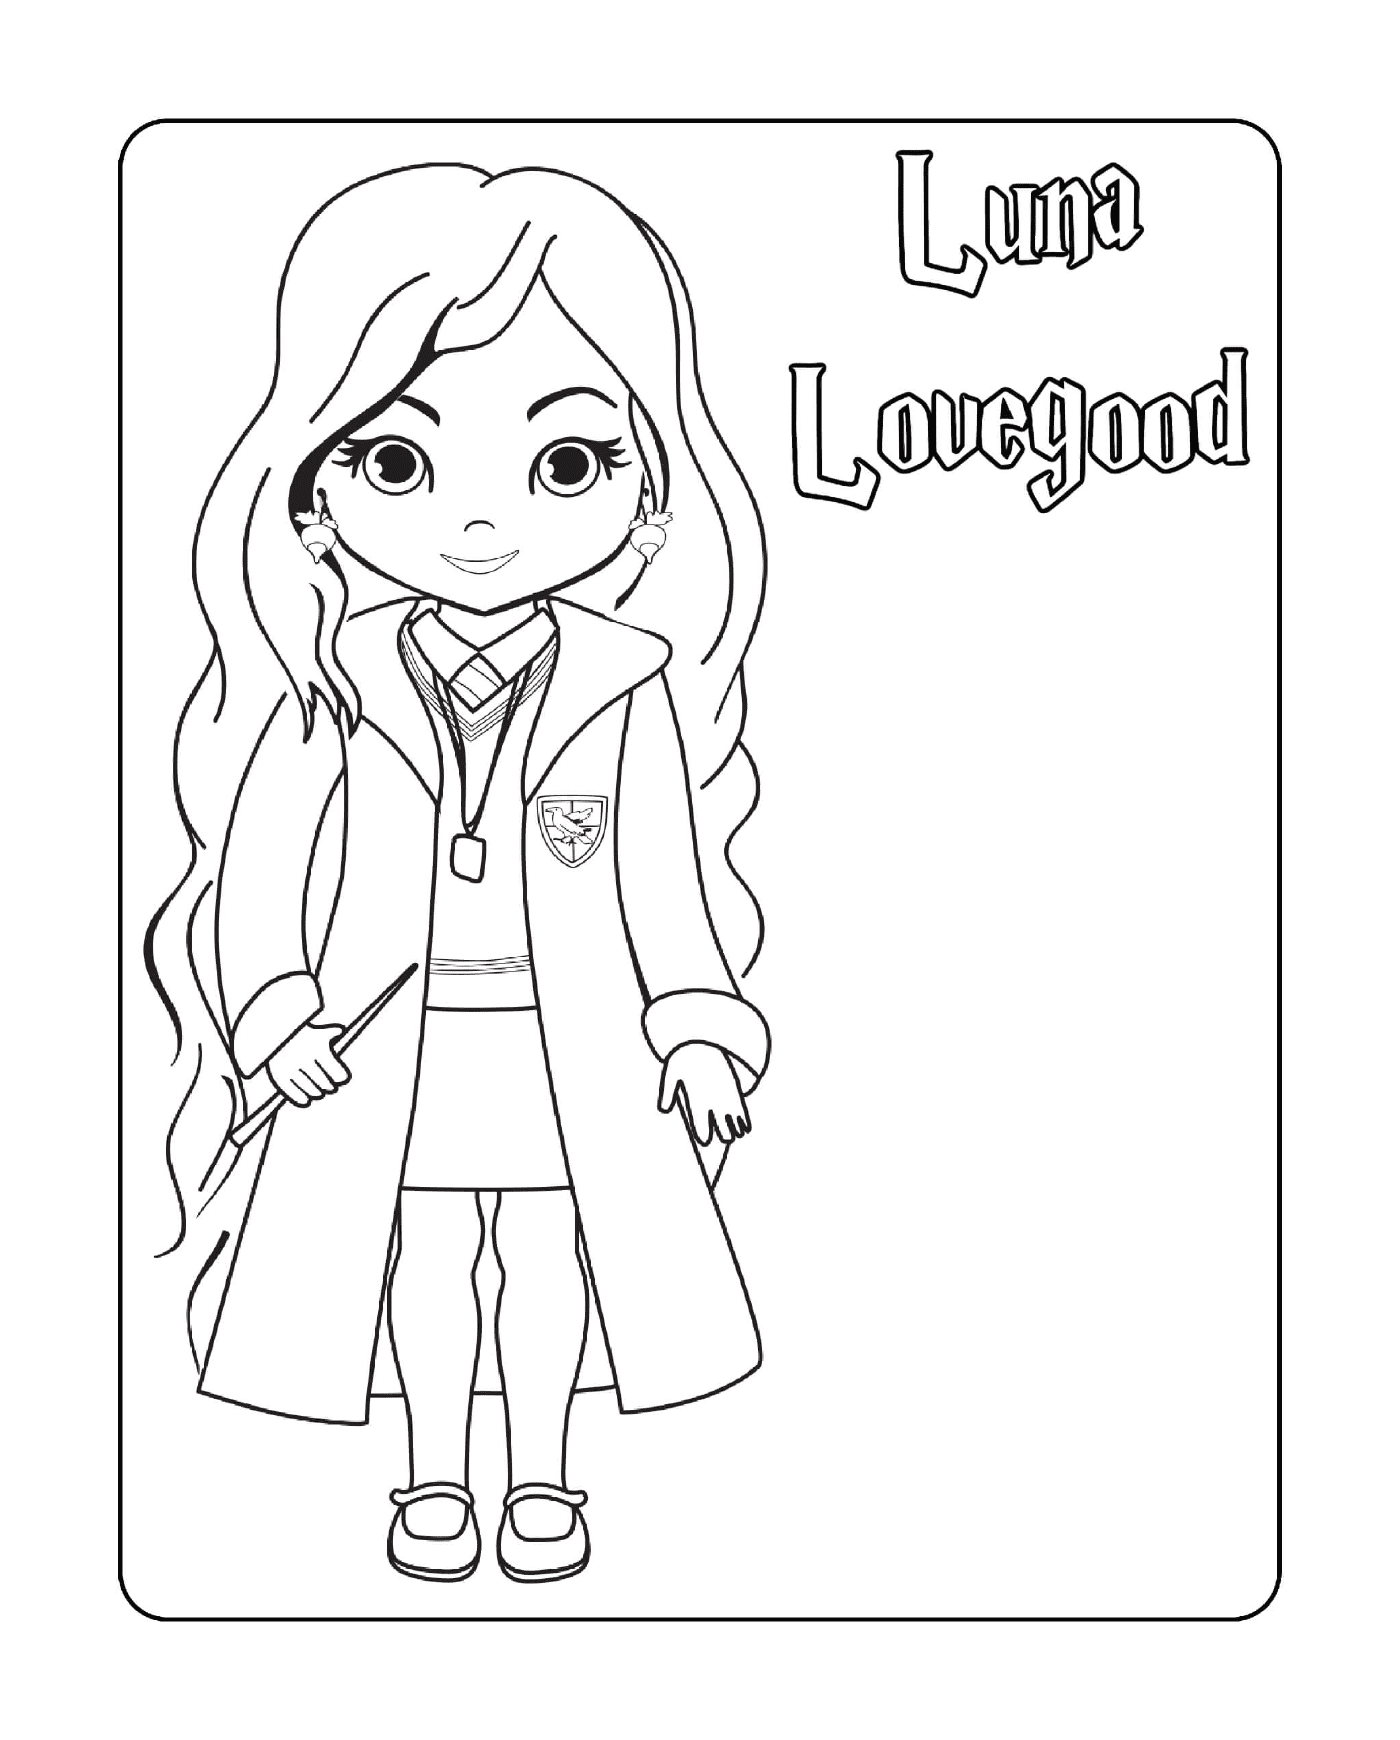  Luna Lovegood, wand in hand 